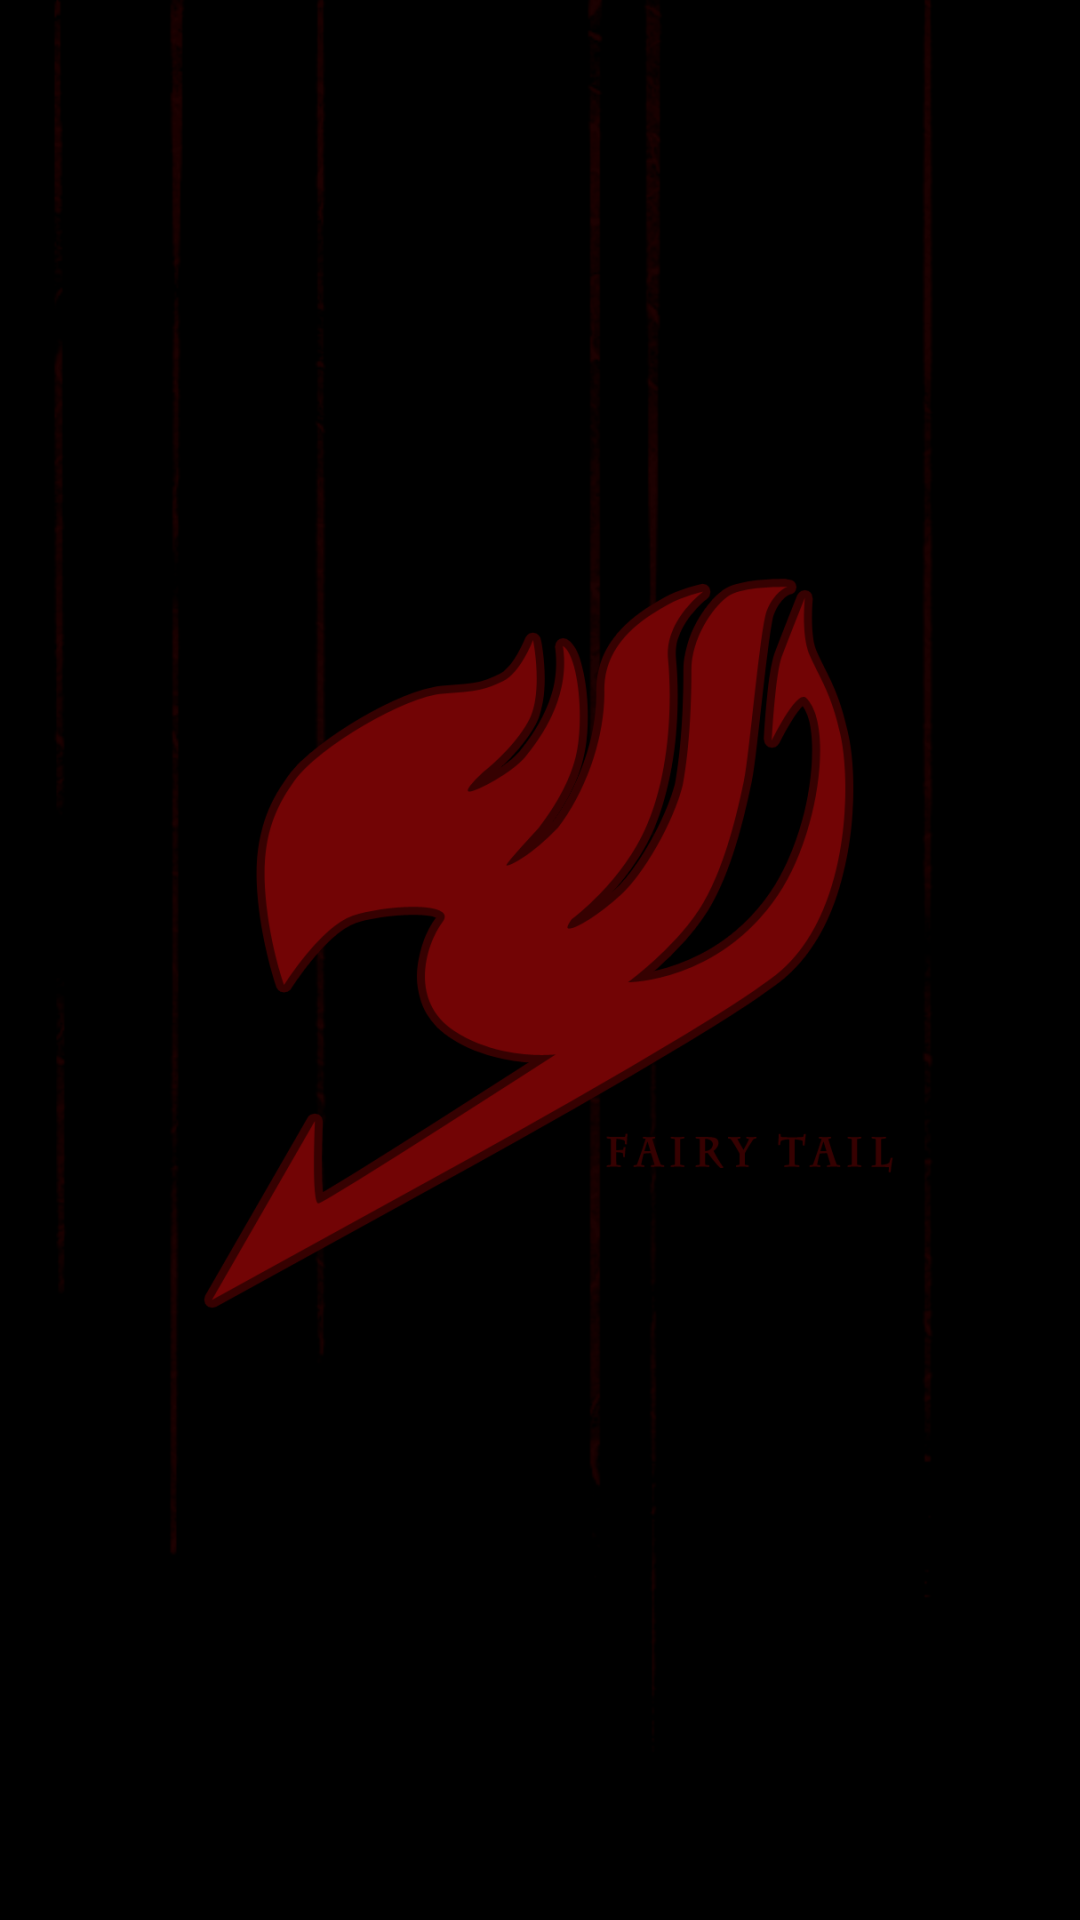 Fairy Tail Logo Wallpaper Full HD On Wallpaper 1080p HD